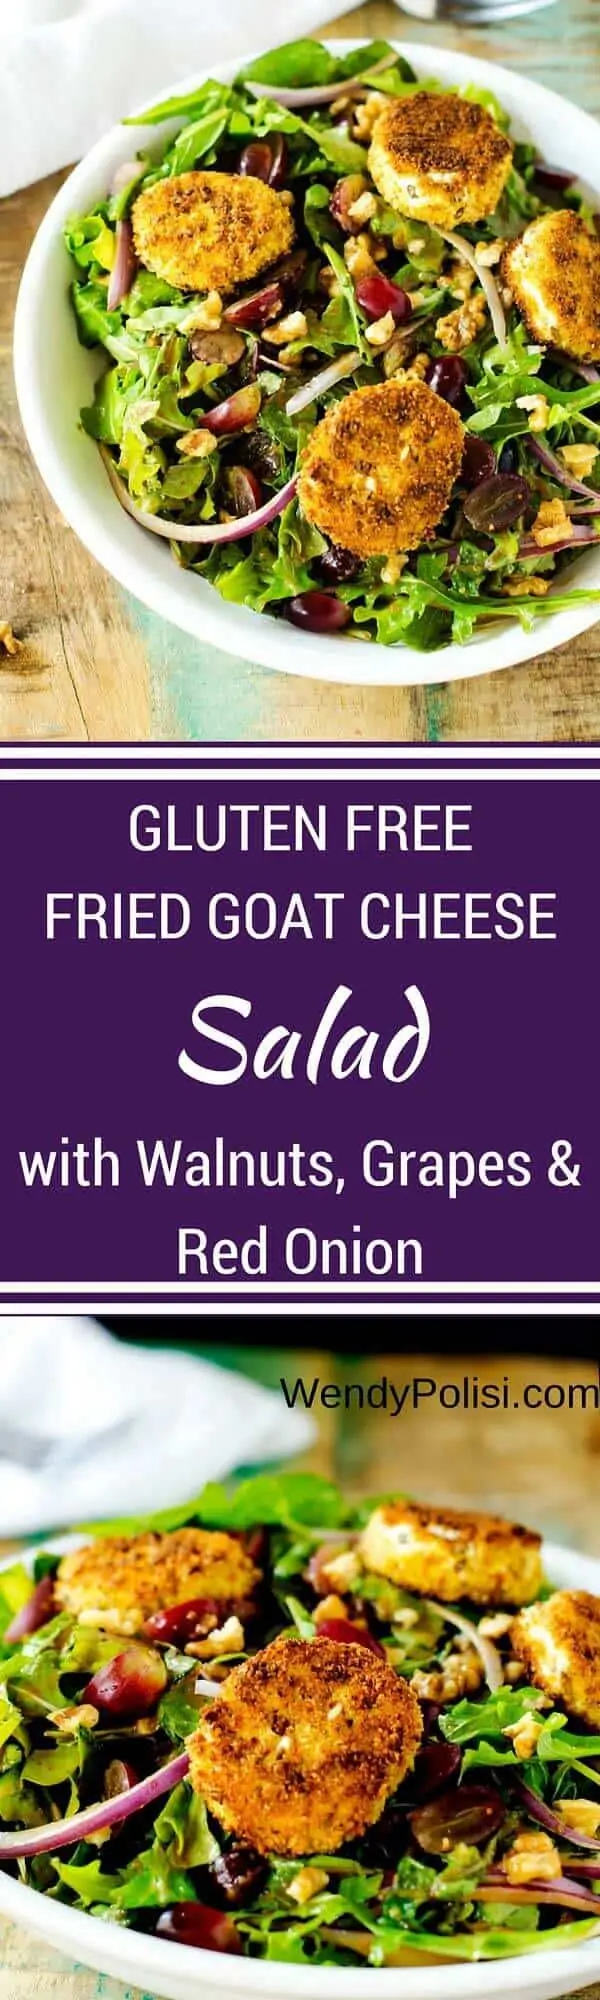 Gluten Free Fried Goat Cheese Salad